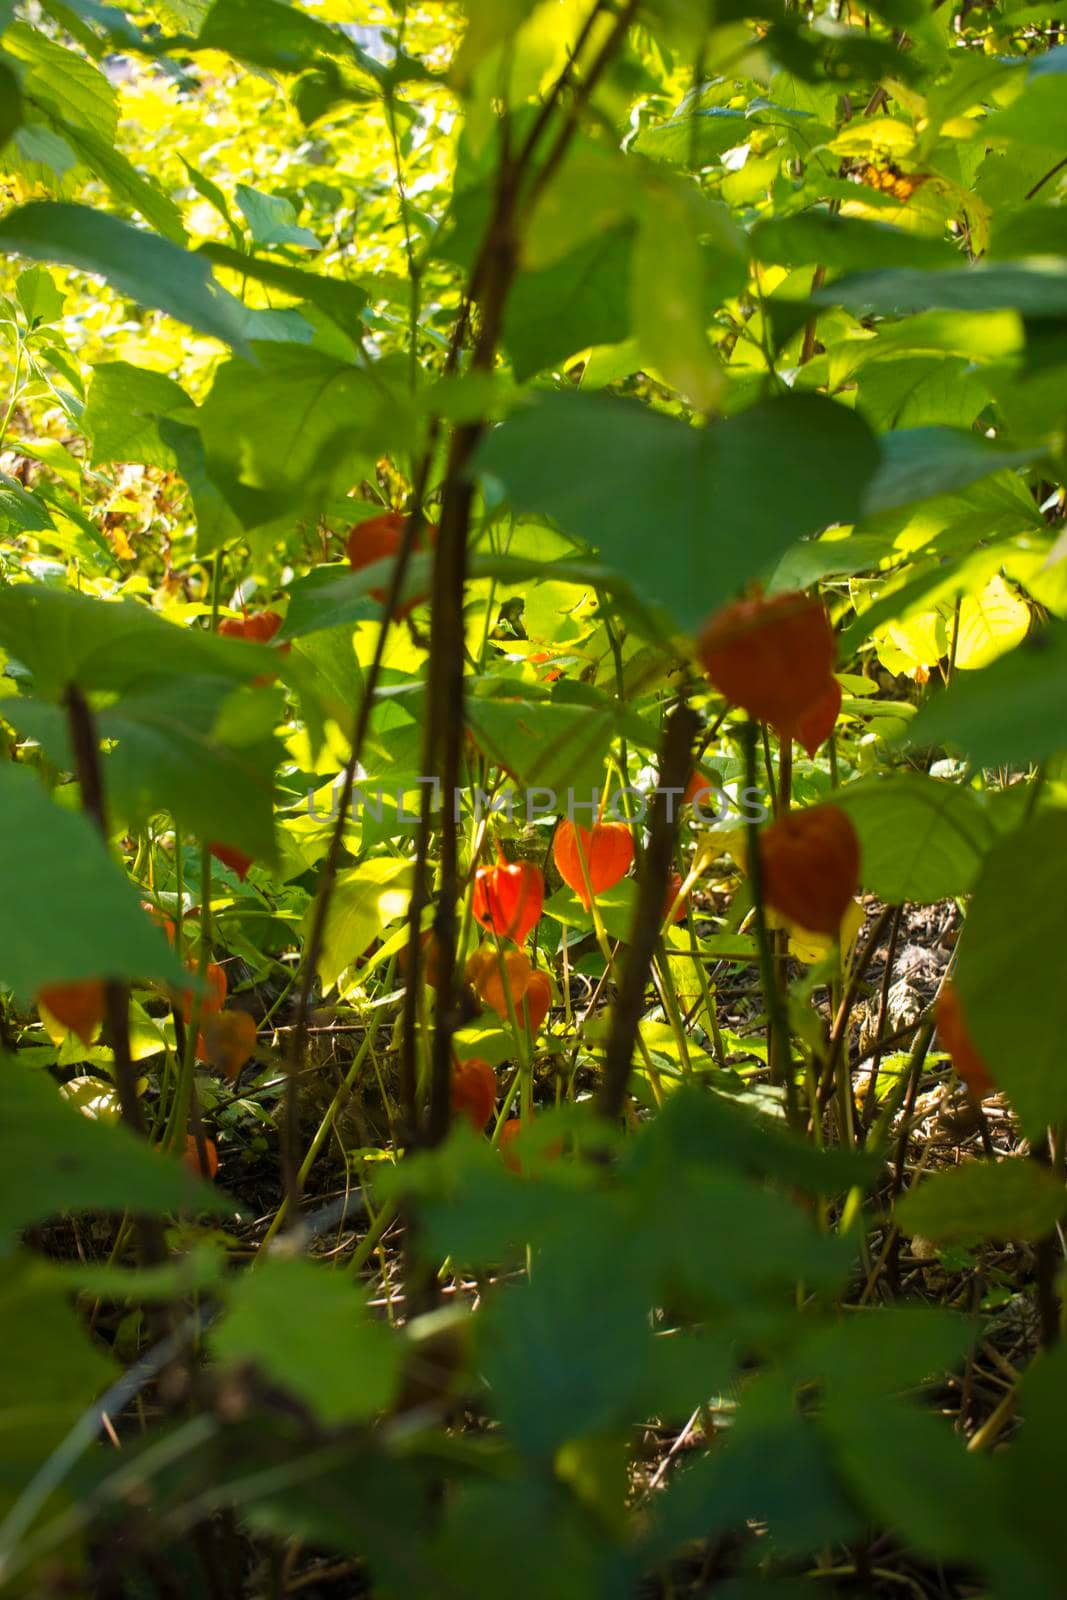 Physalis alkekengi - orange lanterns of physalis alkekengi among green leaves. High quality photo